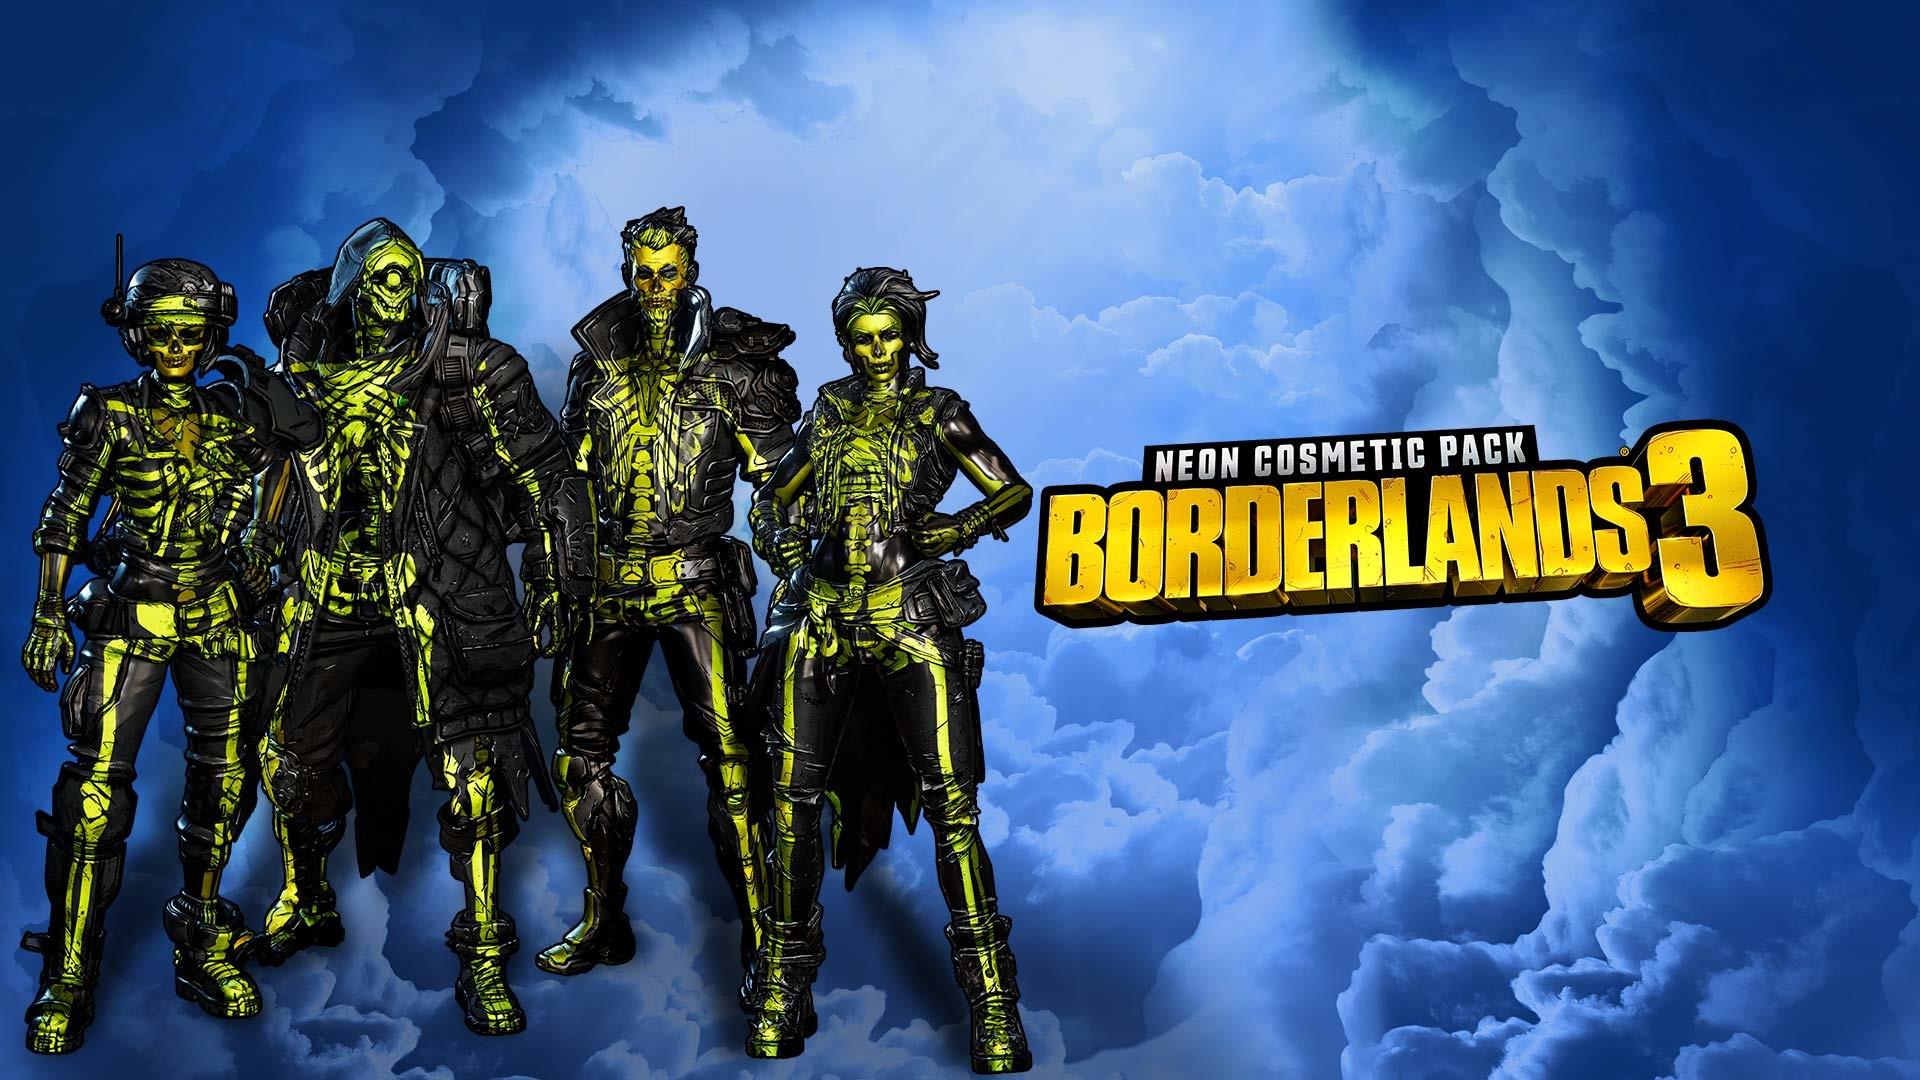 Borderlands 3: Neon Cosmetic Pack